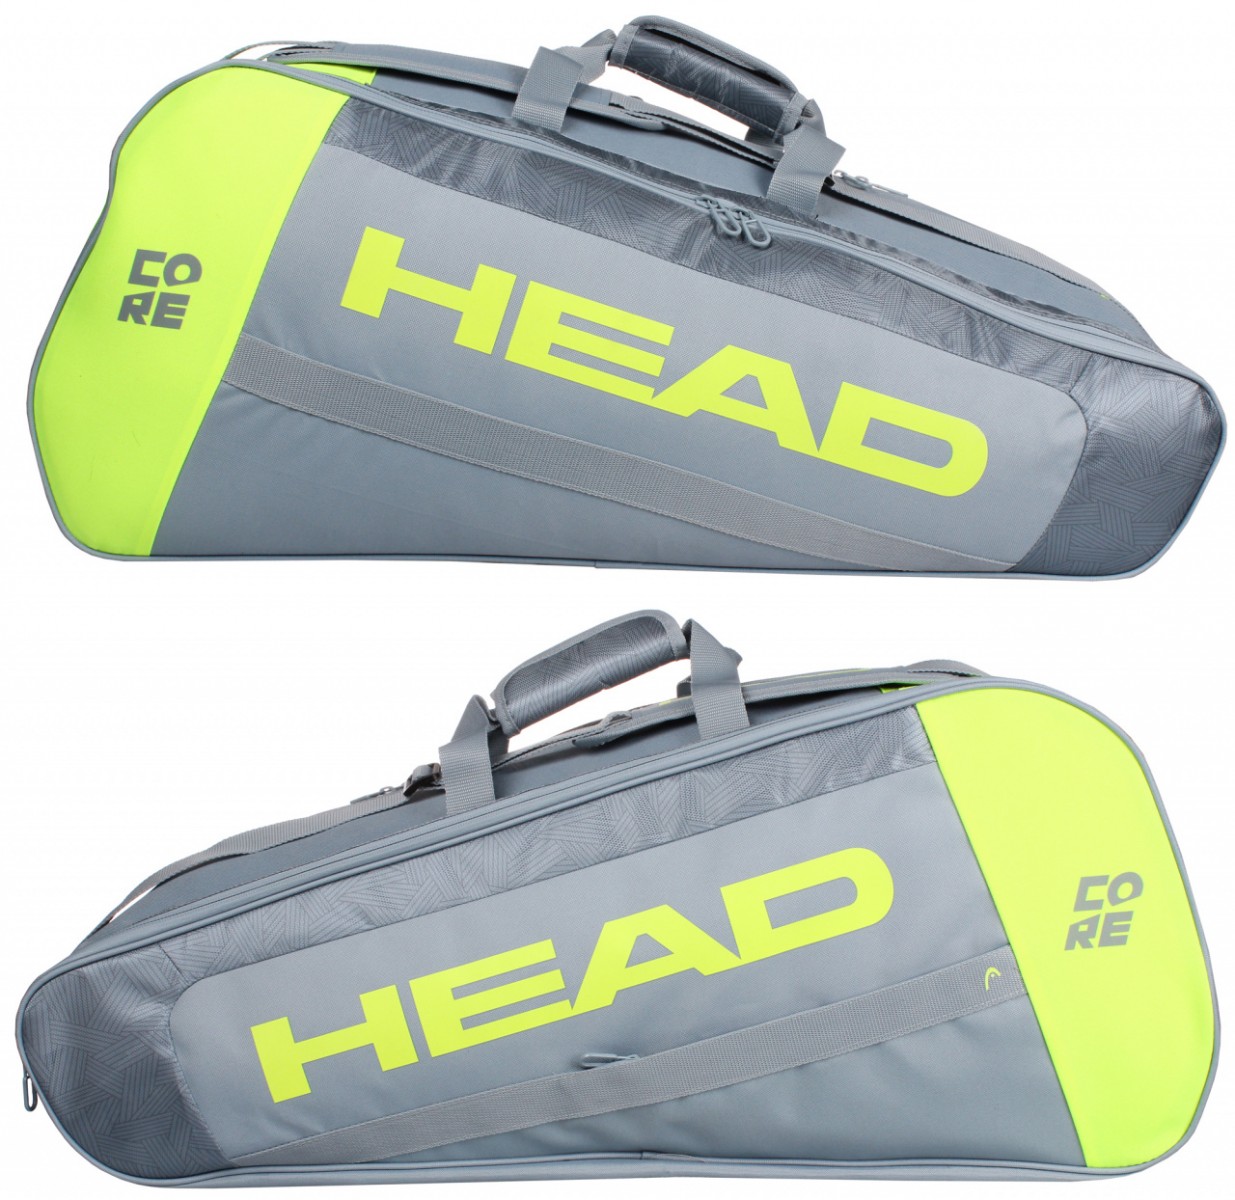 Теннисная сумка Head Core 9R Supercombi grey/neon yellow